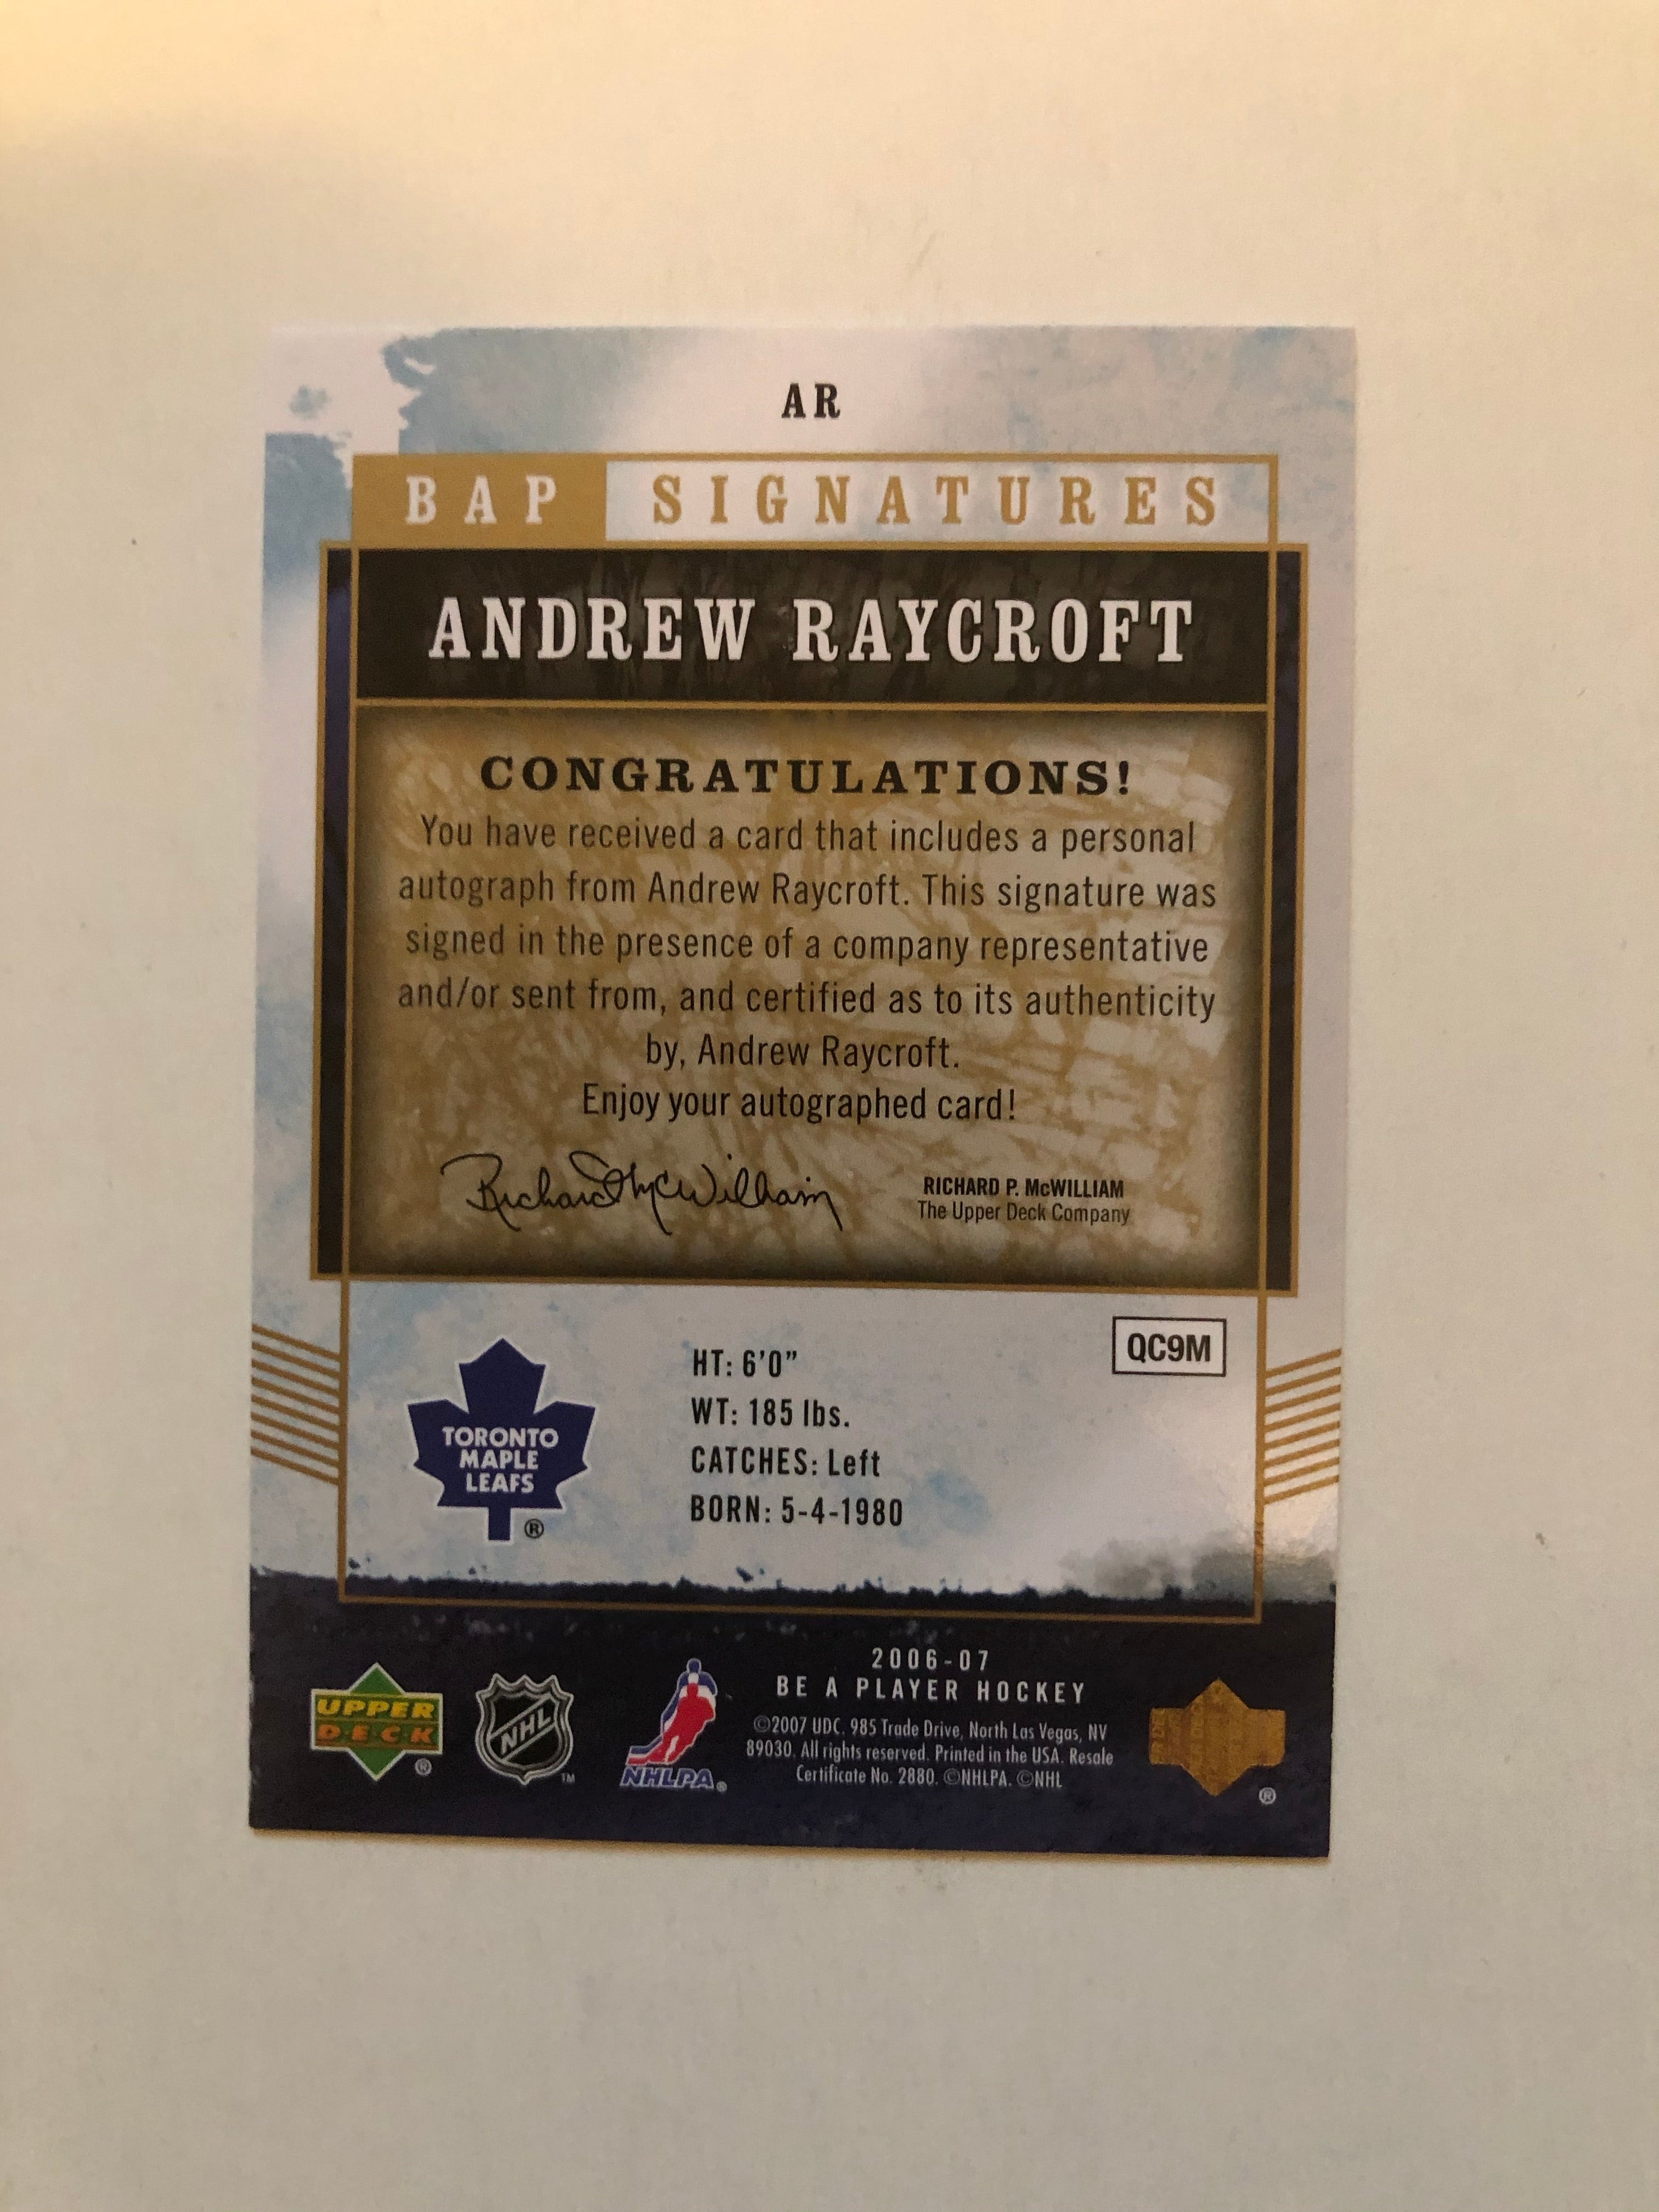 Andrew Raycroft Toronto Maple Leafs hockey autograph insert card